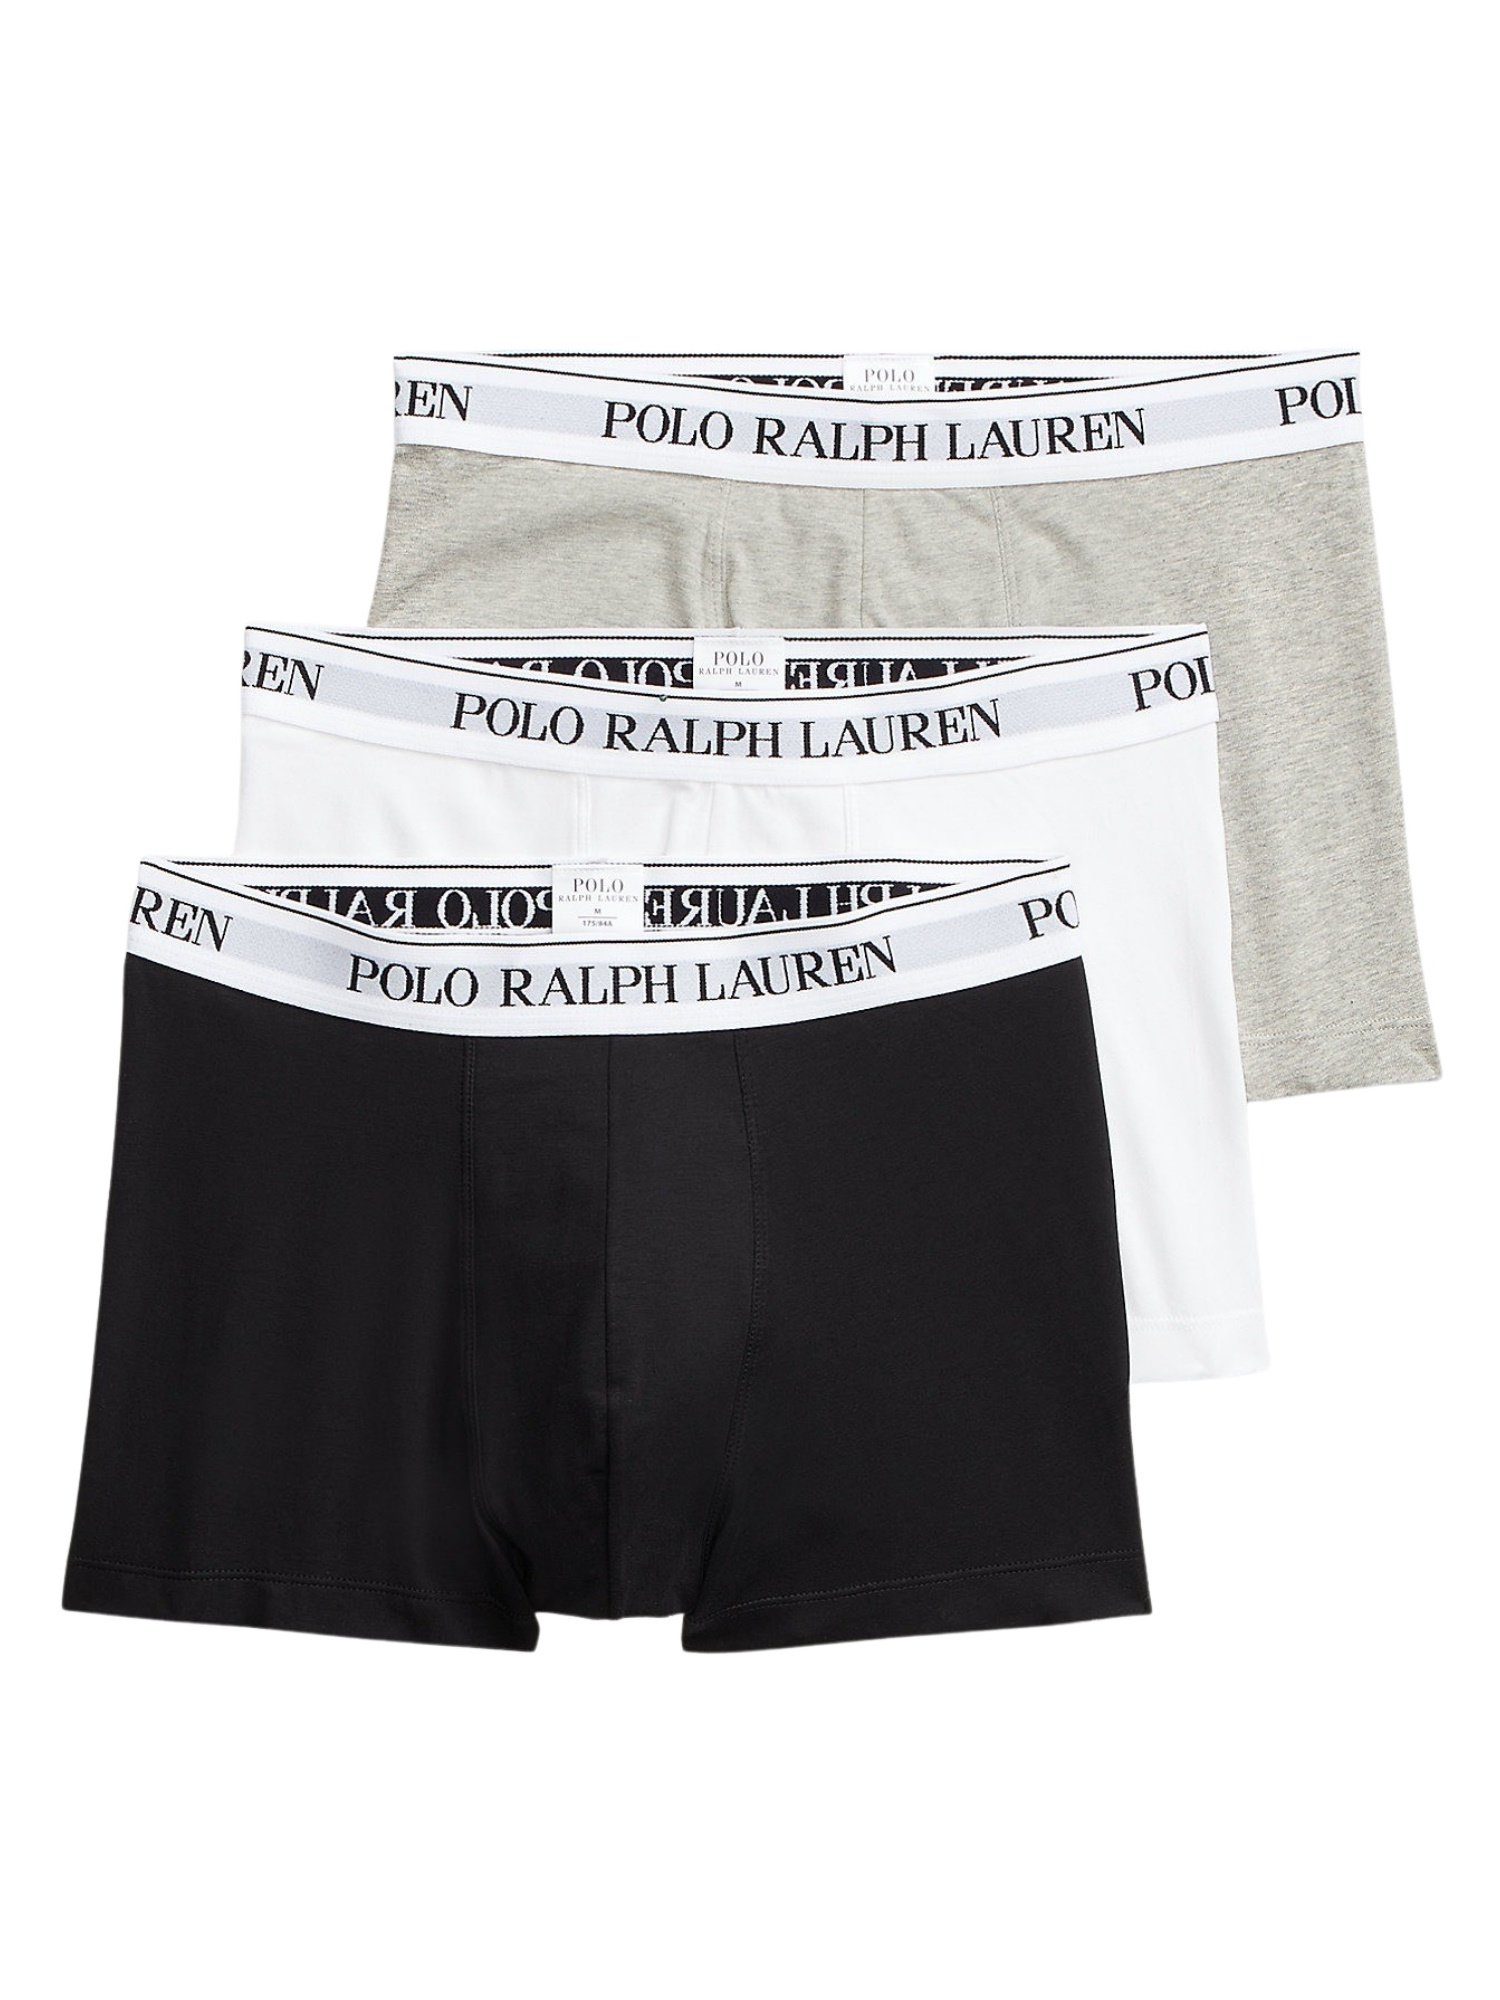 Polo Ralph Lauren Ralph Lauren Unterhose Boxershorts Schwarz/Weiß/Grau 3er (3-St) Pack Trunks